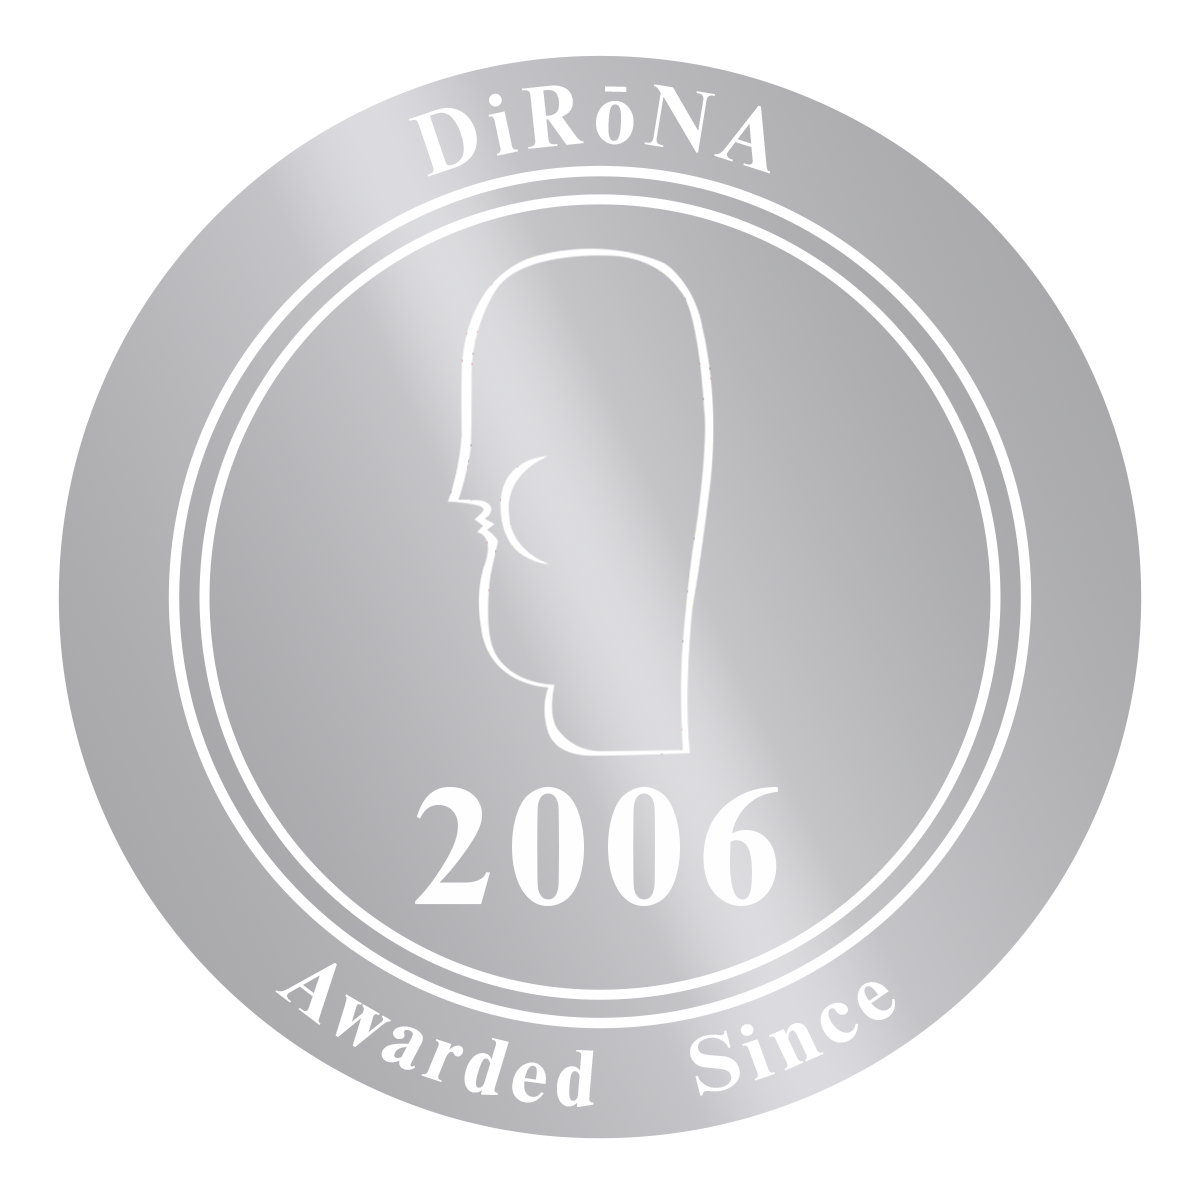 DiRoNA Awarded Restaurant Distinguished Restaurants of North America Since 2006 Badge